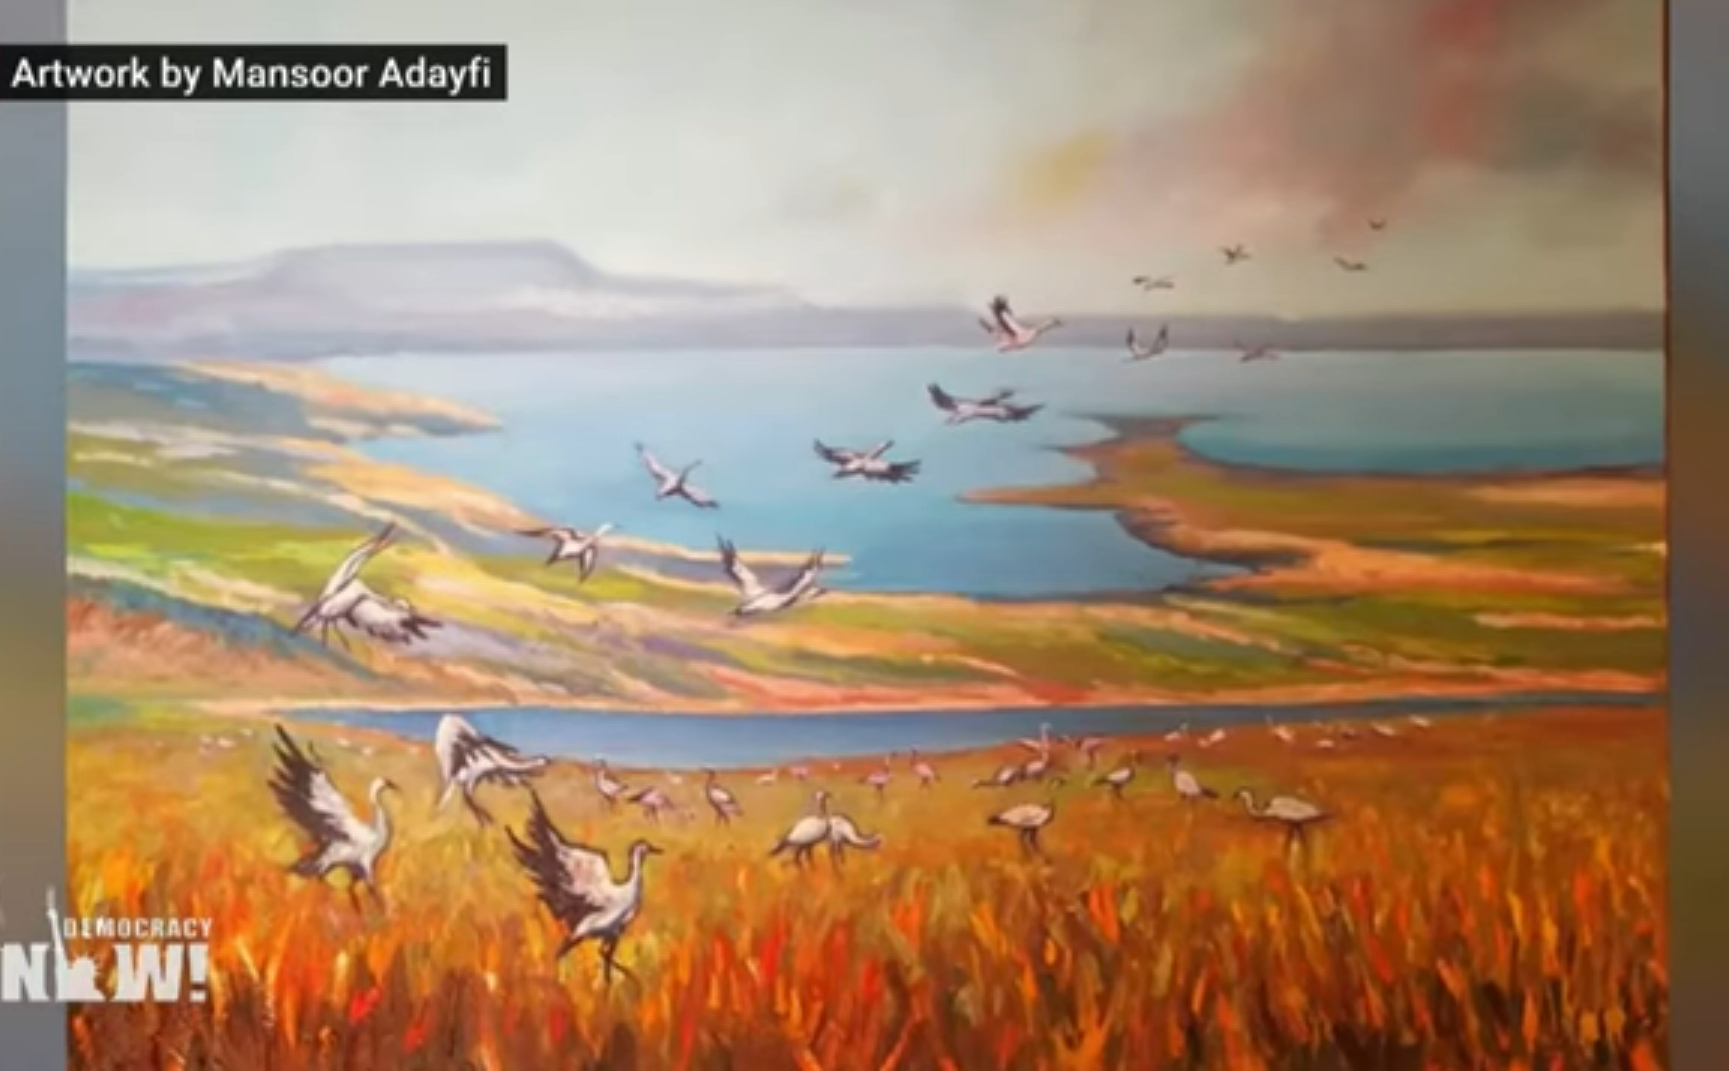 cranes by a coastal landscape - artwork by Mansoor Adayfi